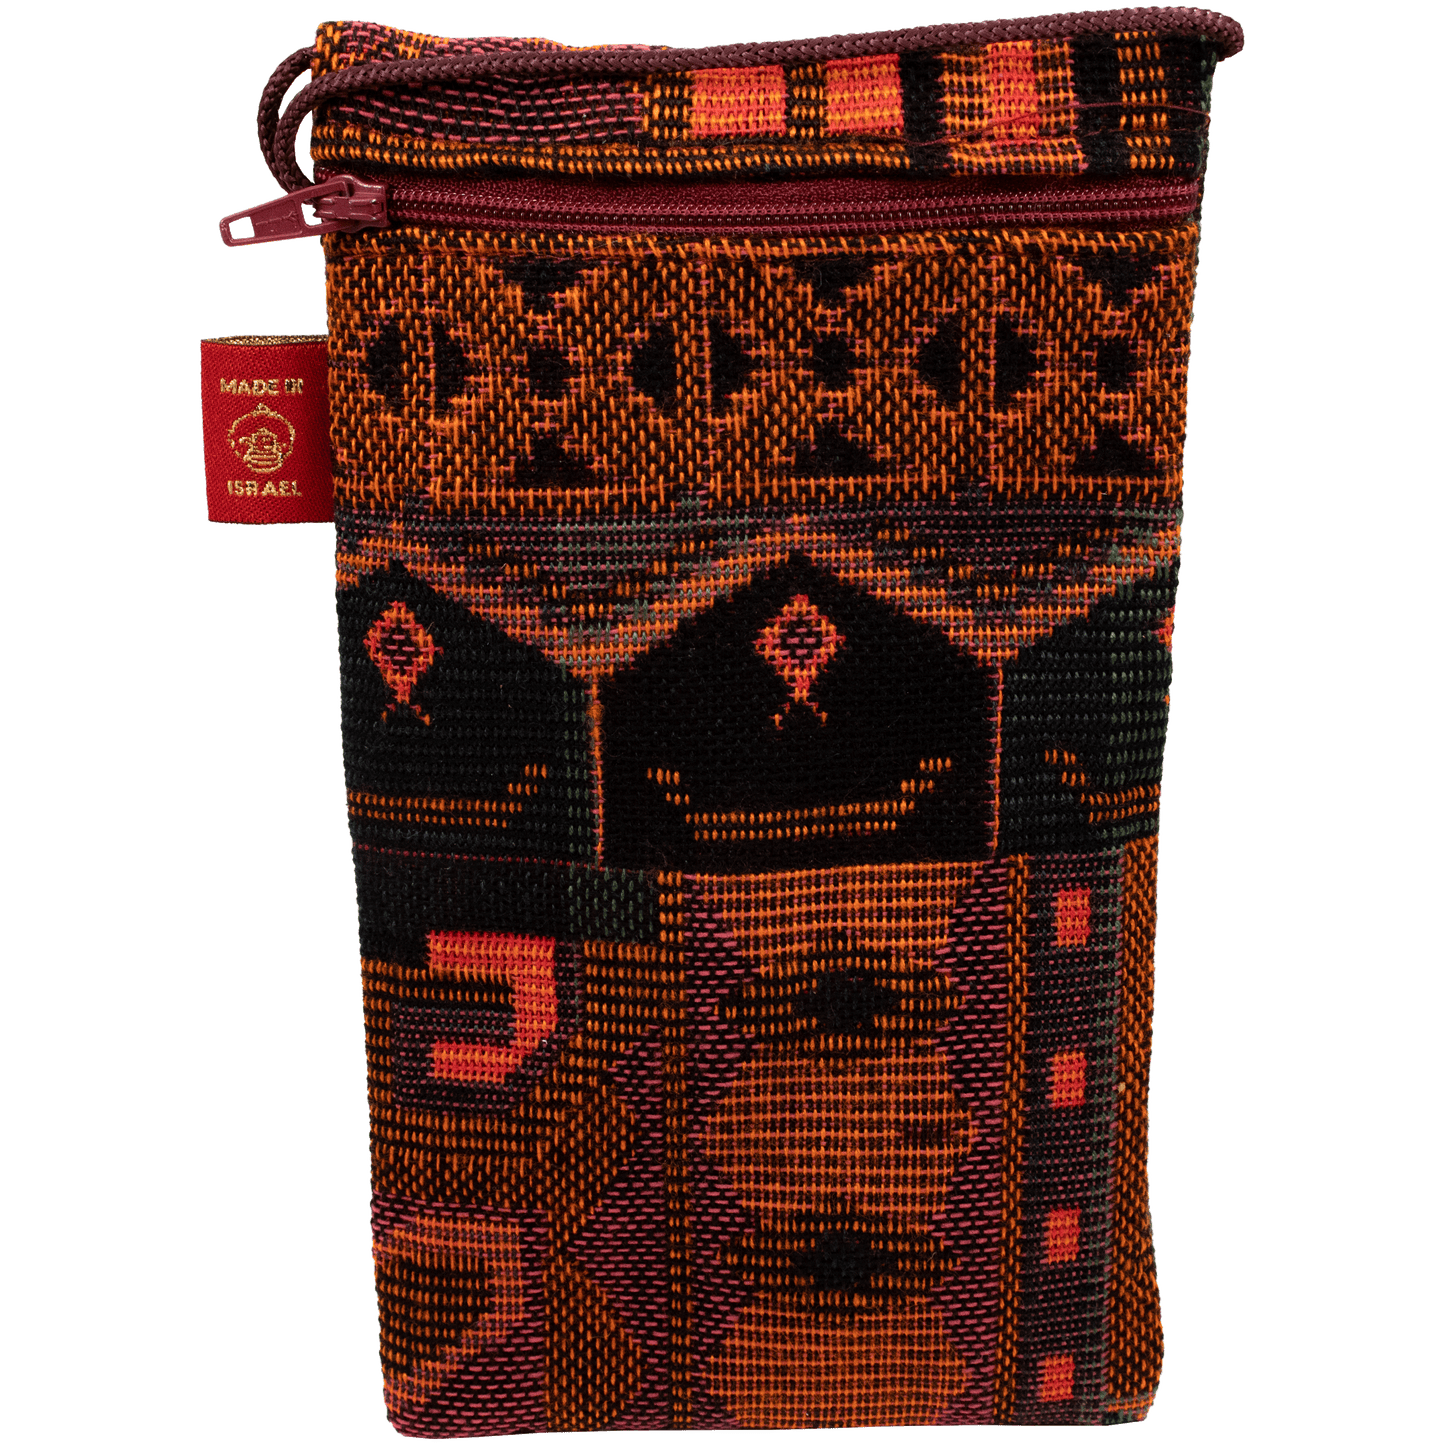 Slim rectangle purse orange black green and maroon with aboriginal pattern